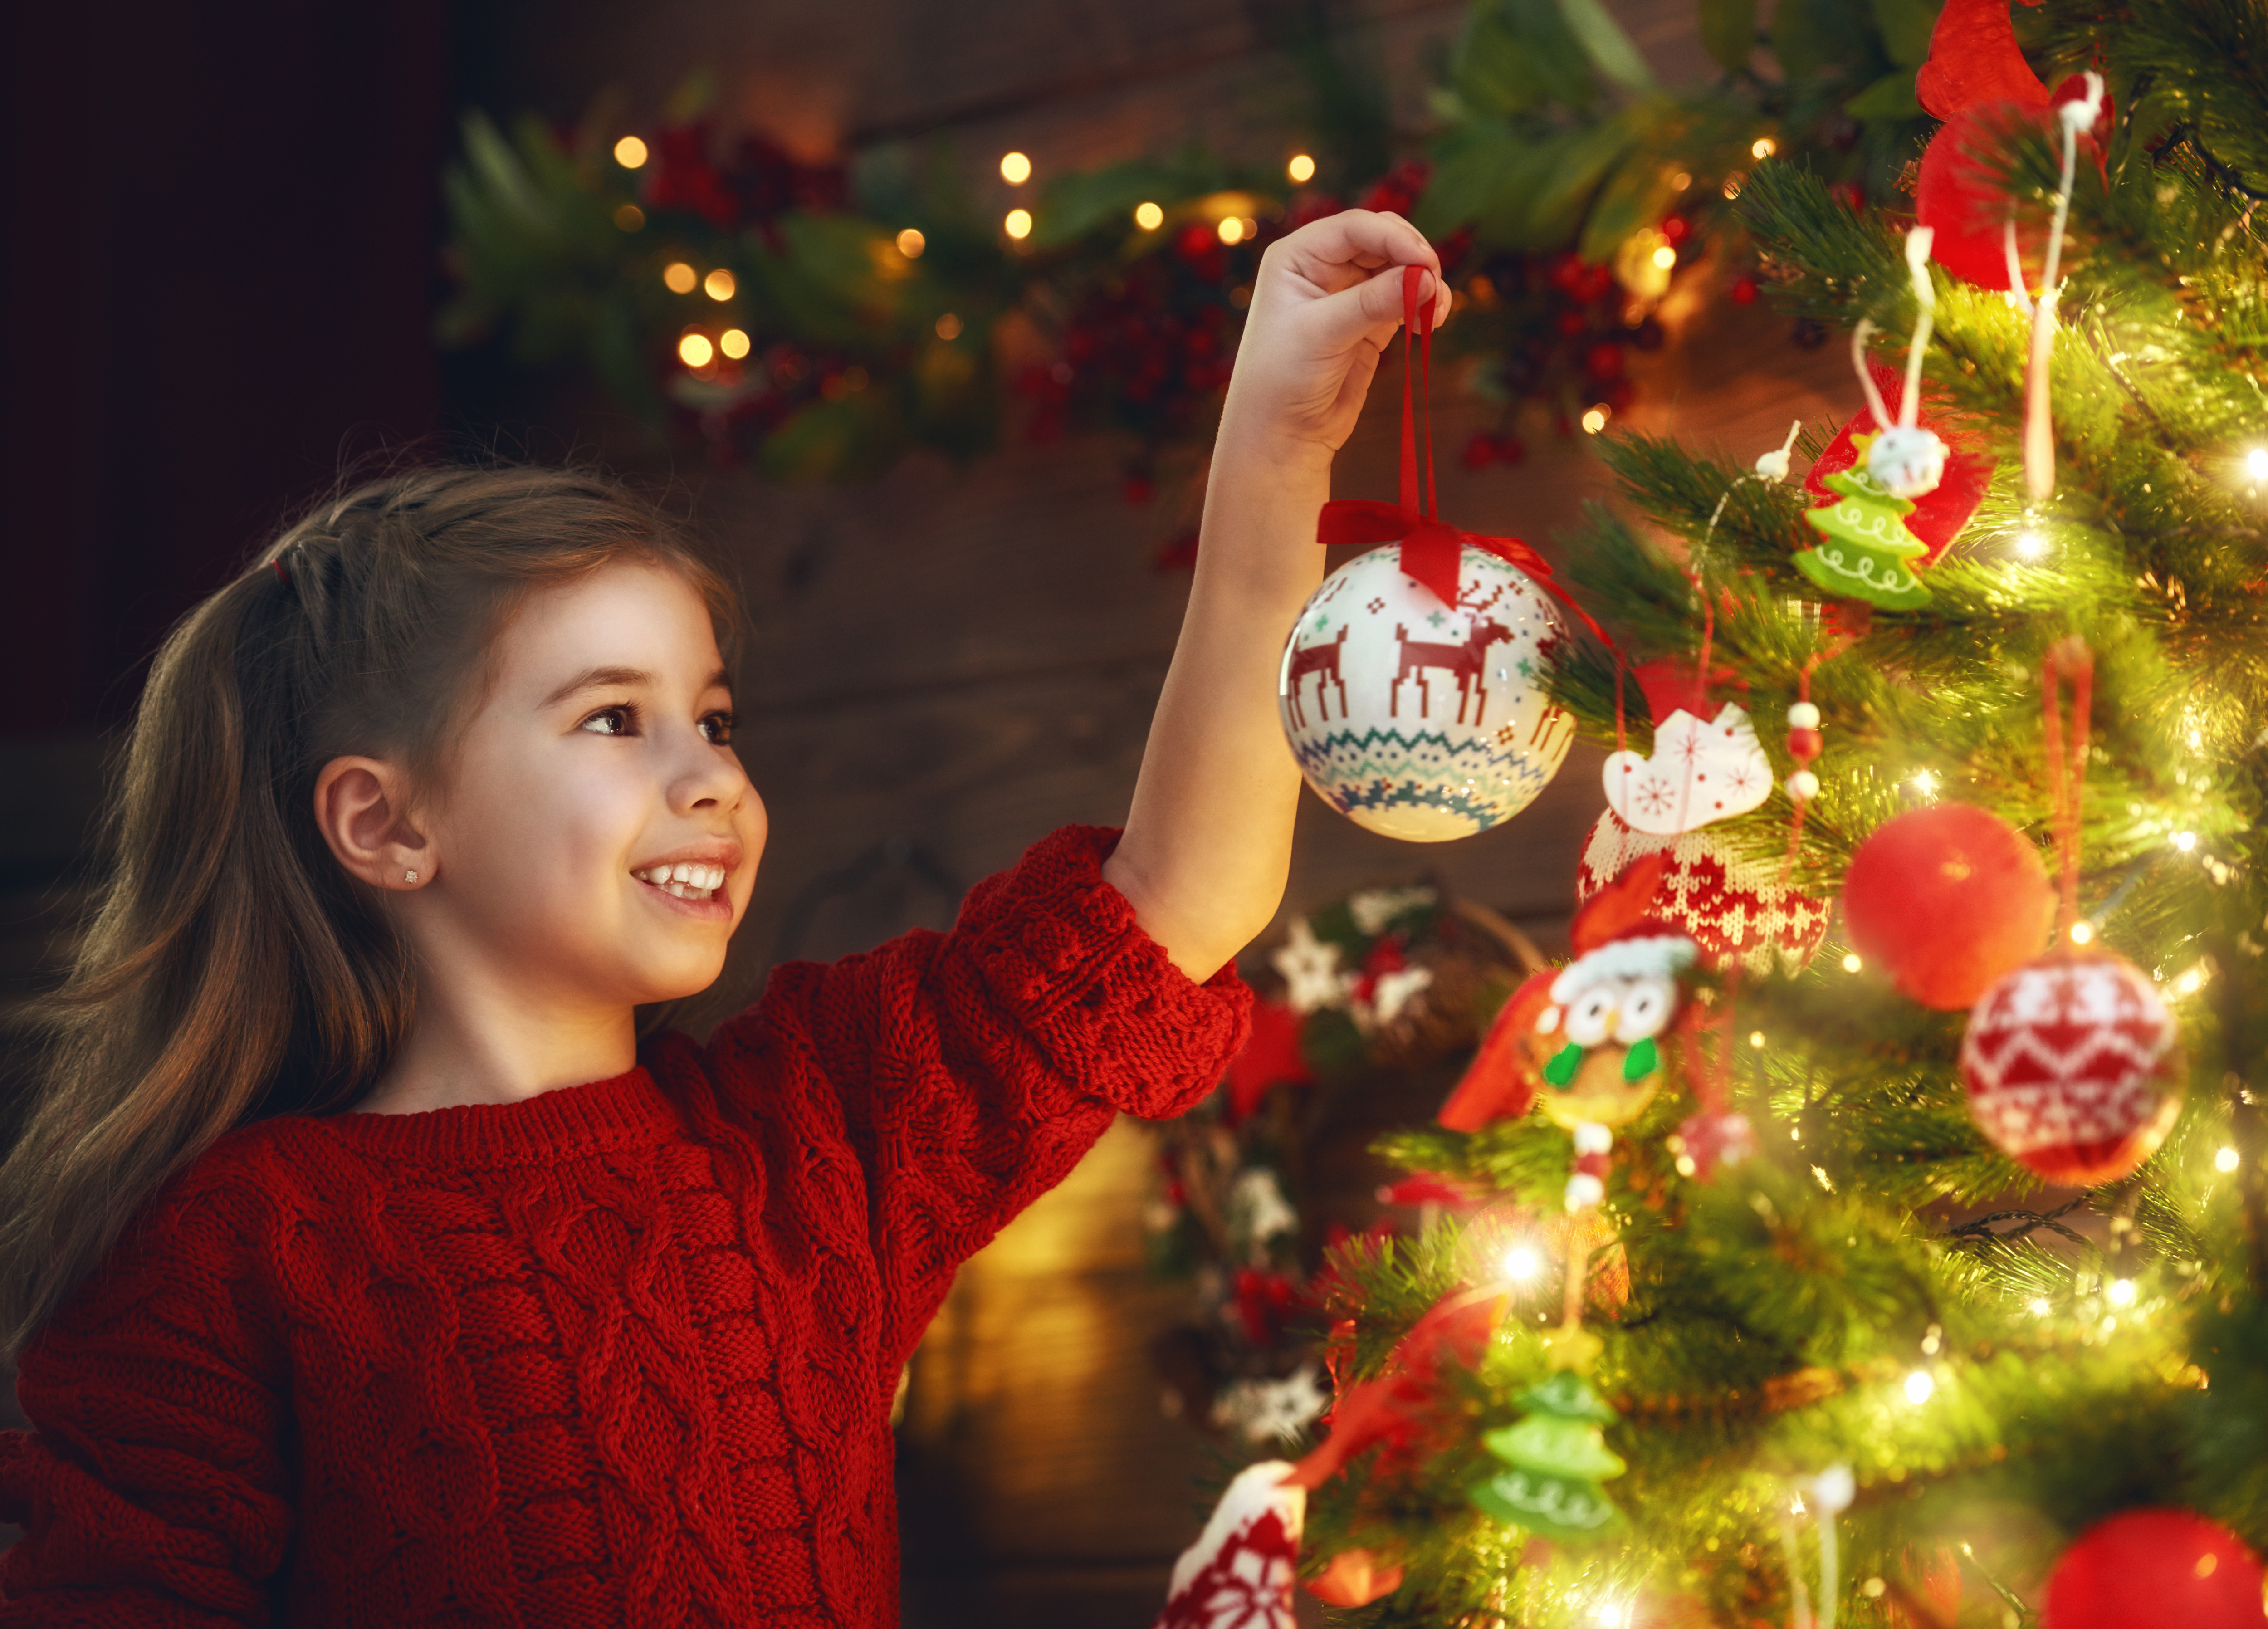 My new year holiday. Ребенок вешает игрушку на елку. Дети наряжают елку. Дети украшают елку. Елка для детей.